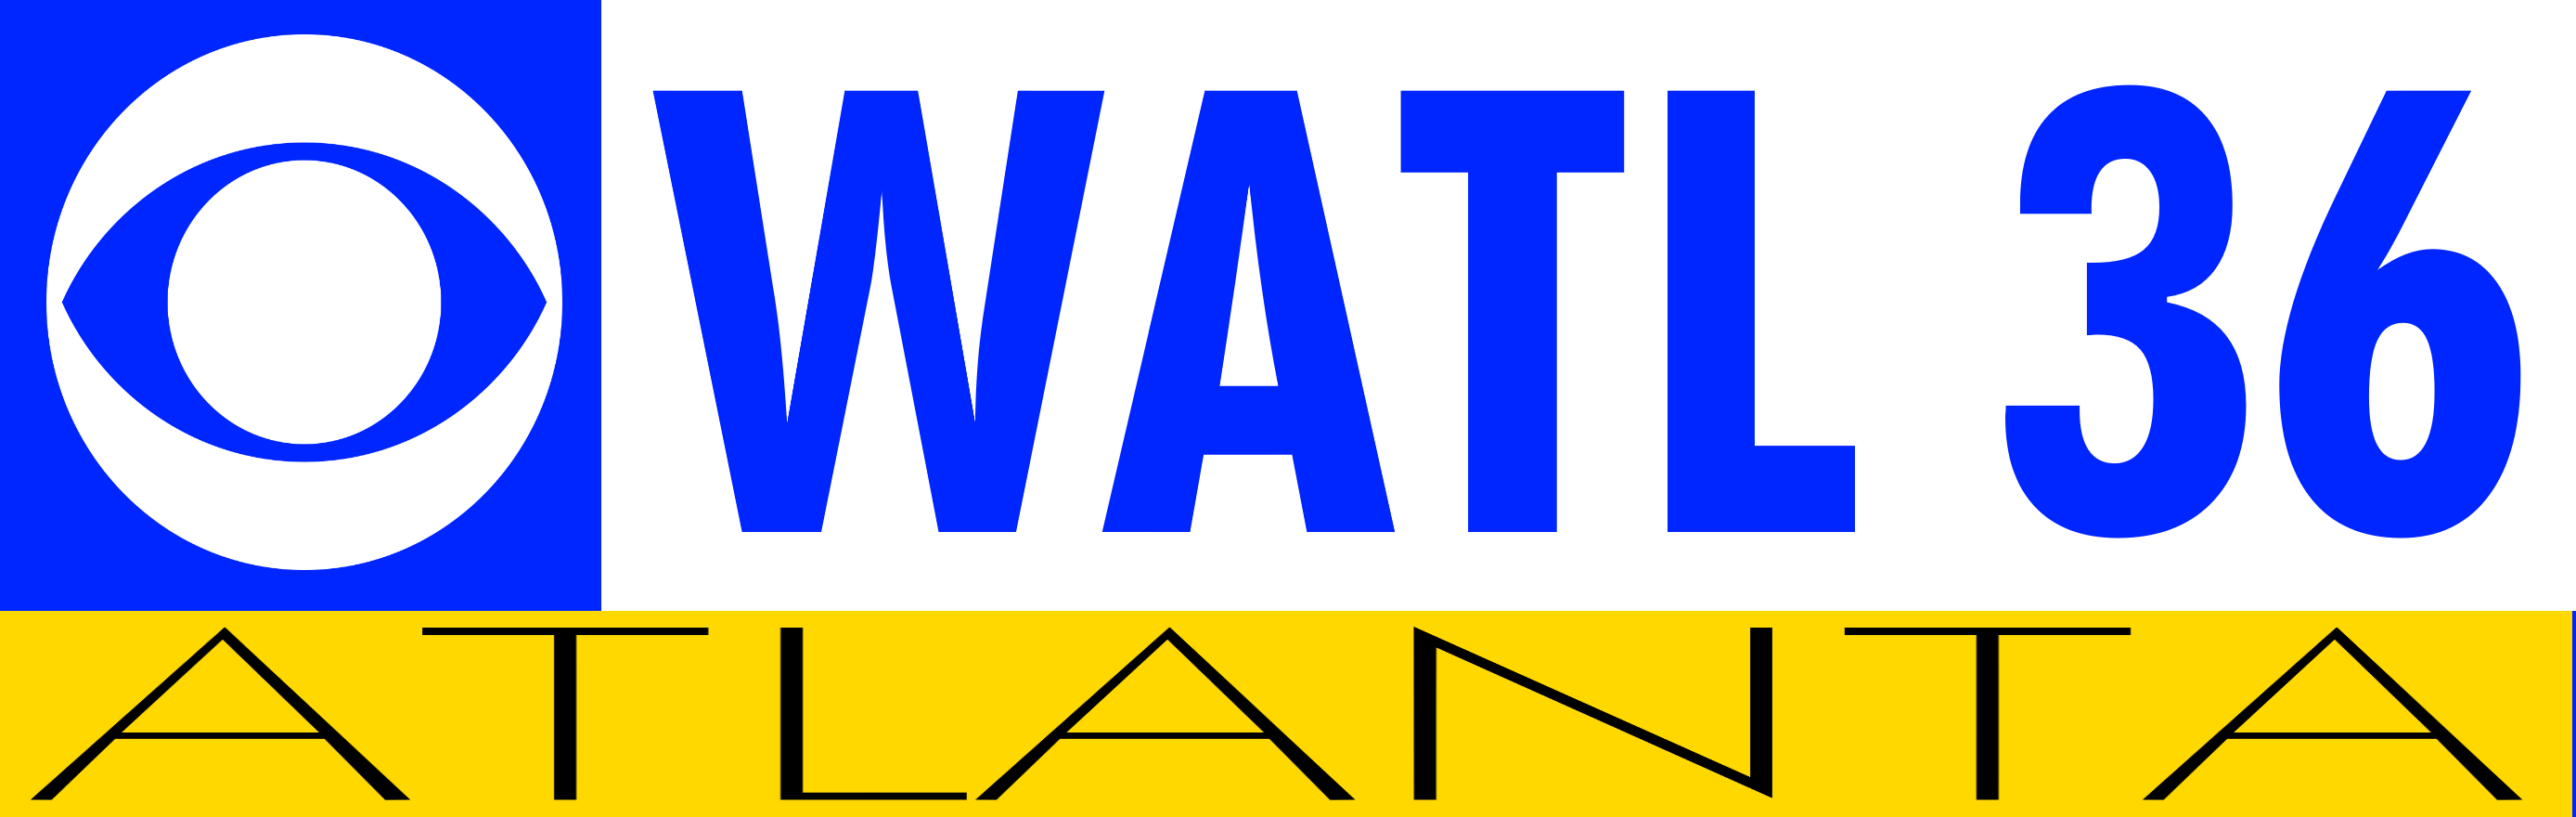 AlternateHistory.com's WATL logo #1.png